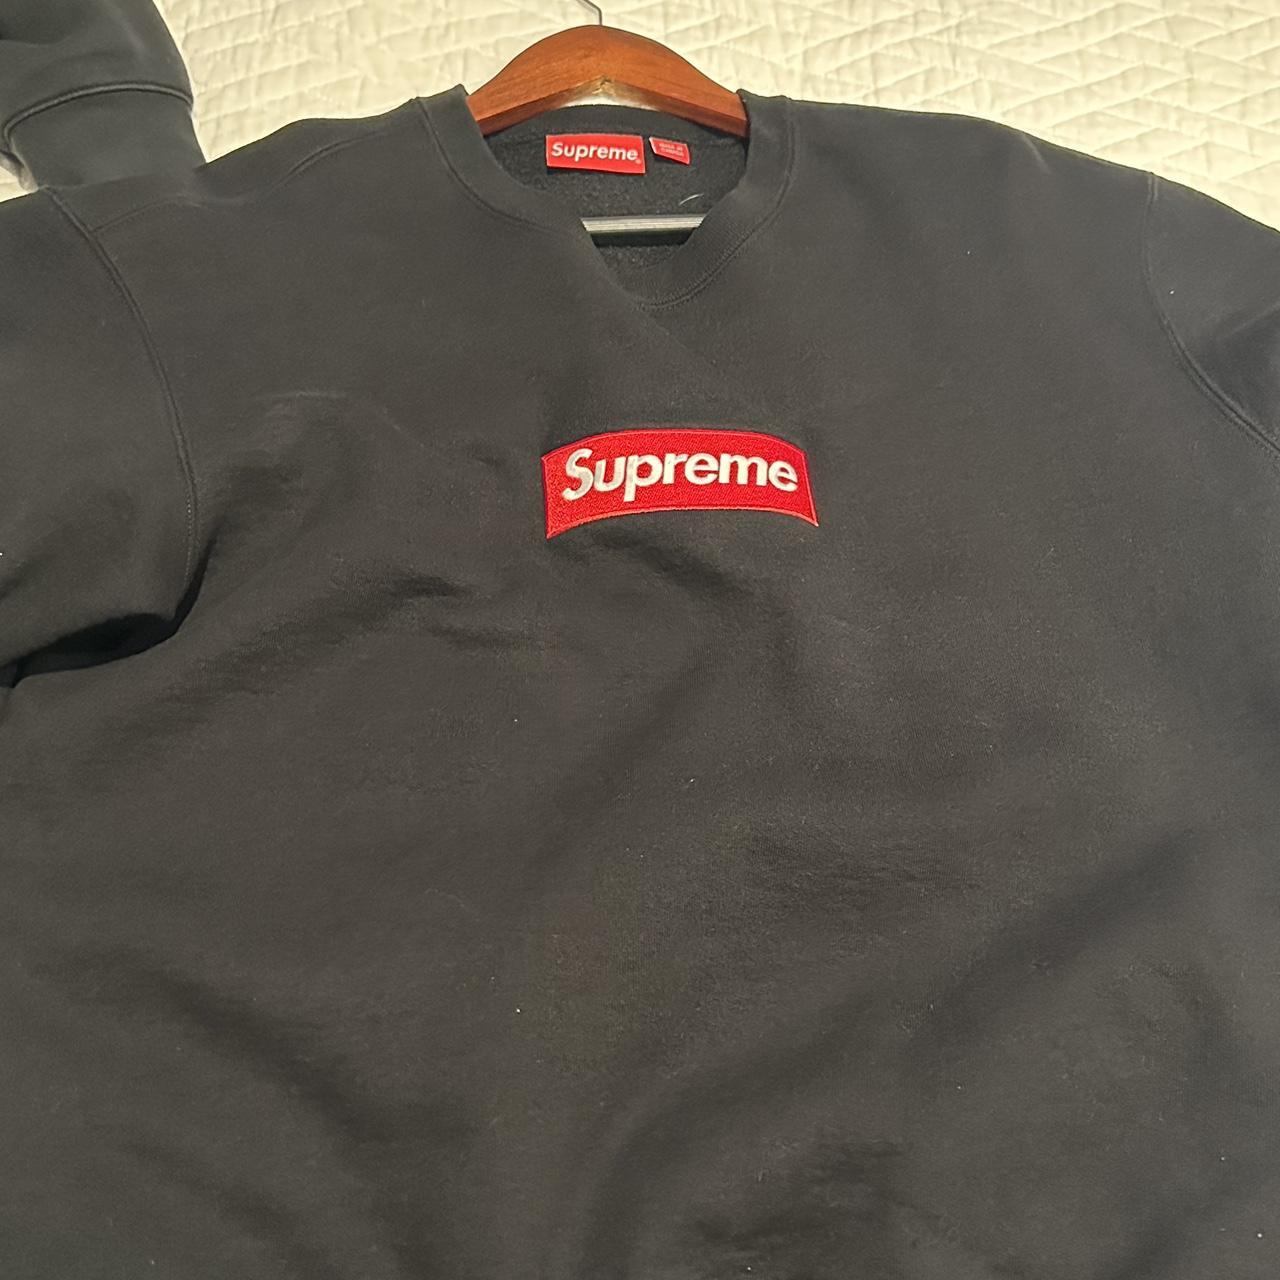 Supreme Men's Box Logo Sweatshirt